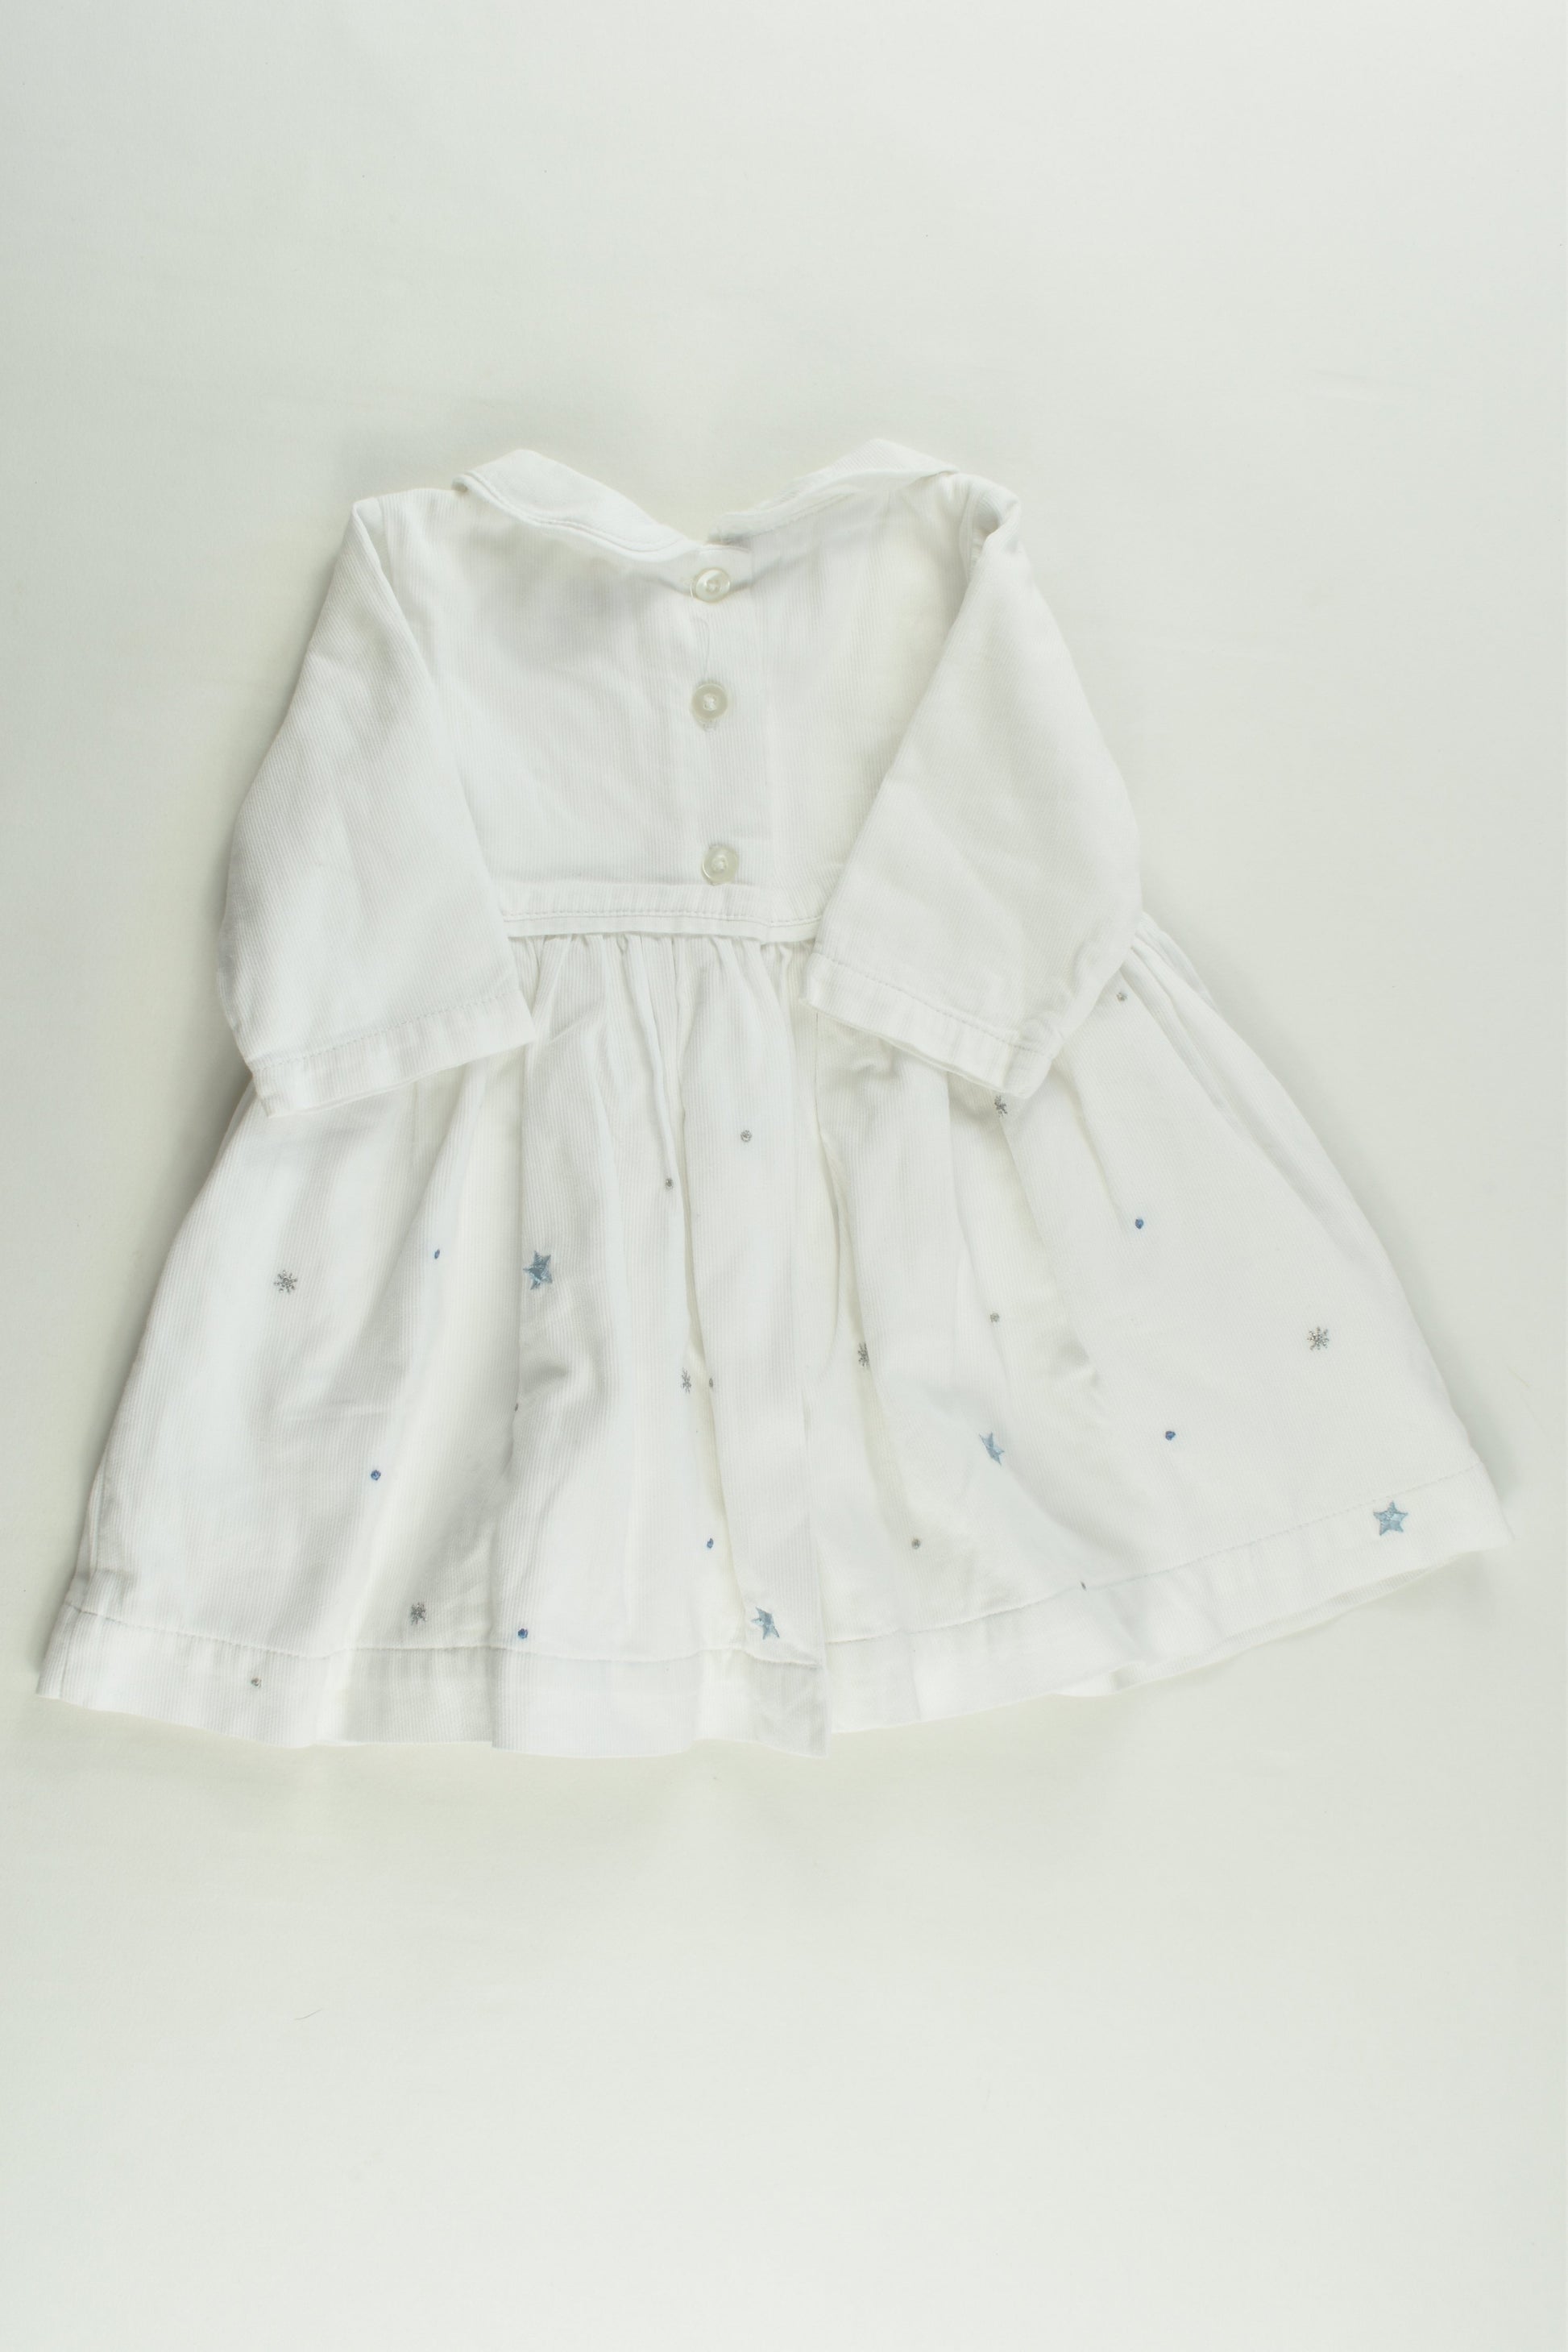 Baby Gap Size 000 (Newborn, 3-6 months) Stars Lined Dress